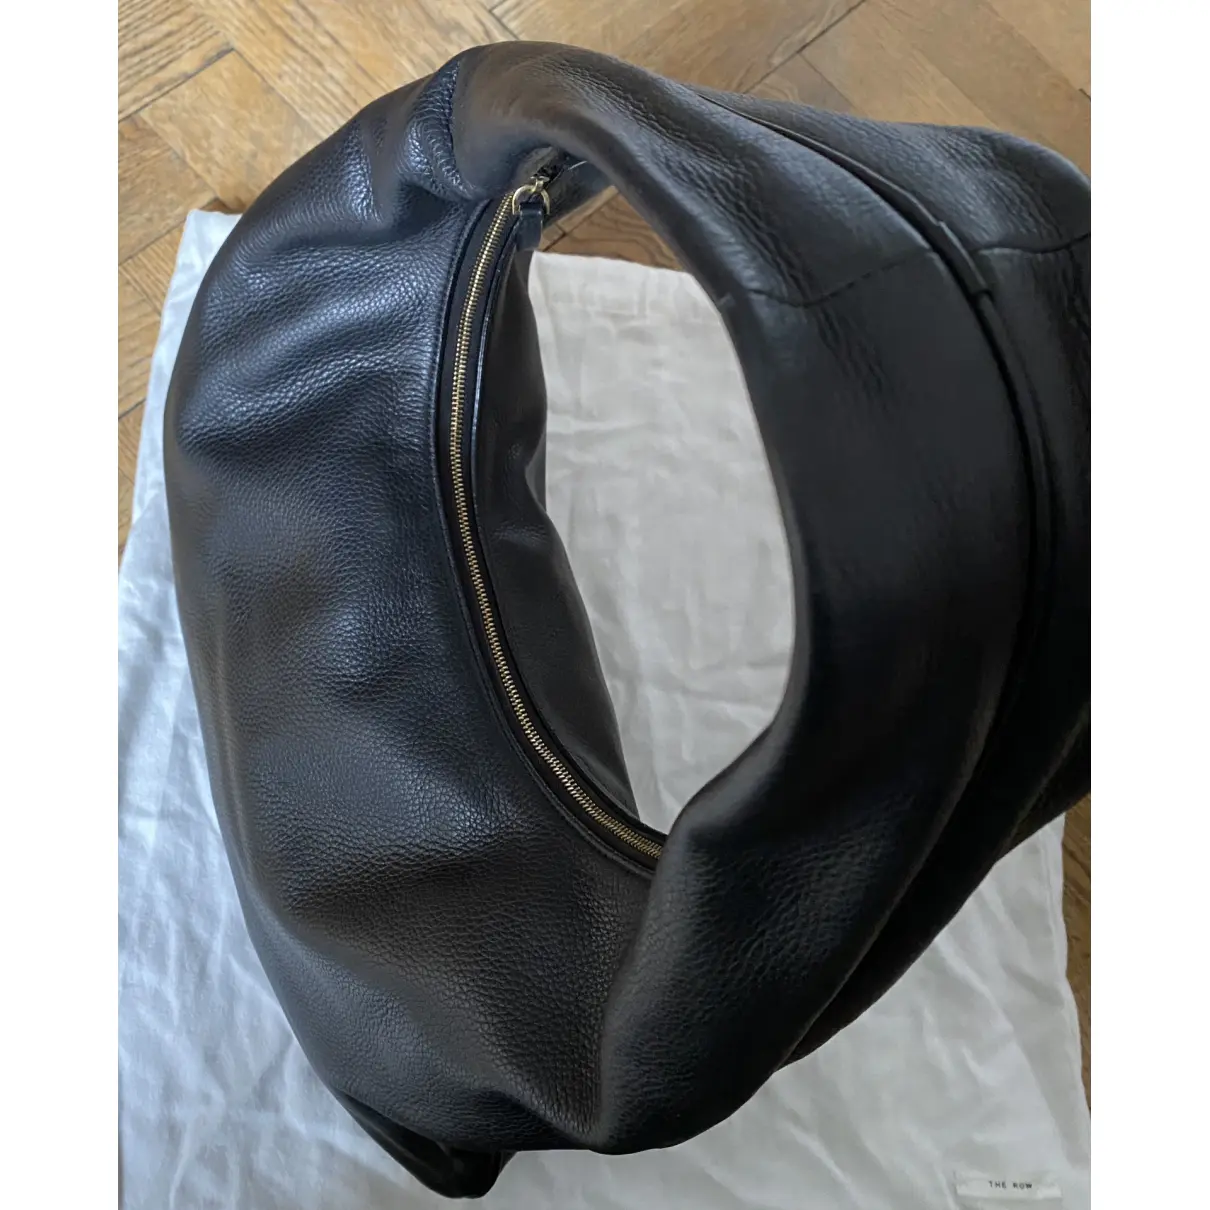 Everyday leather handbag The Row